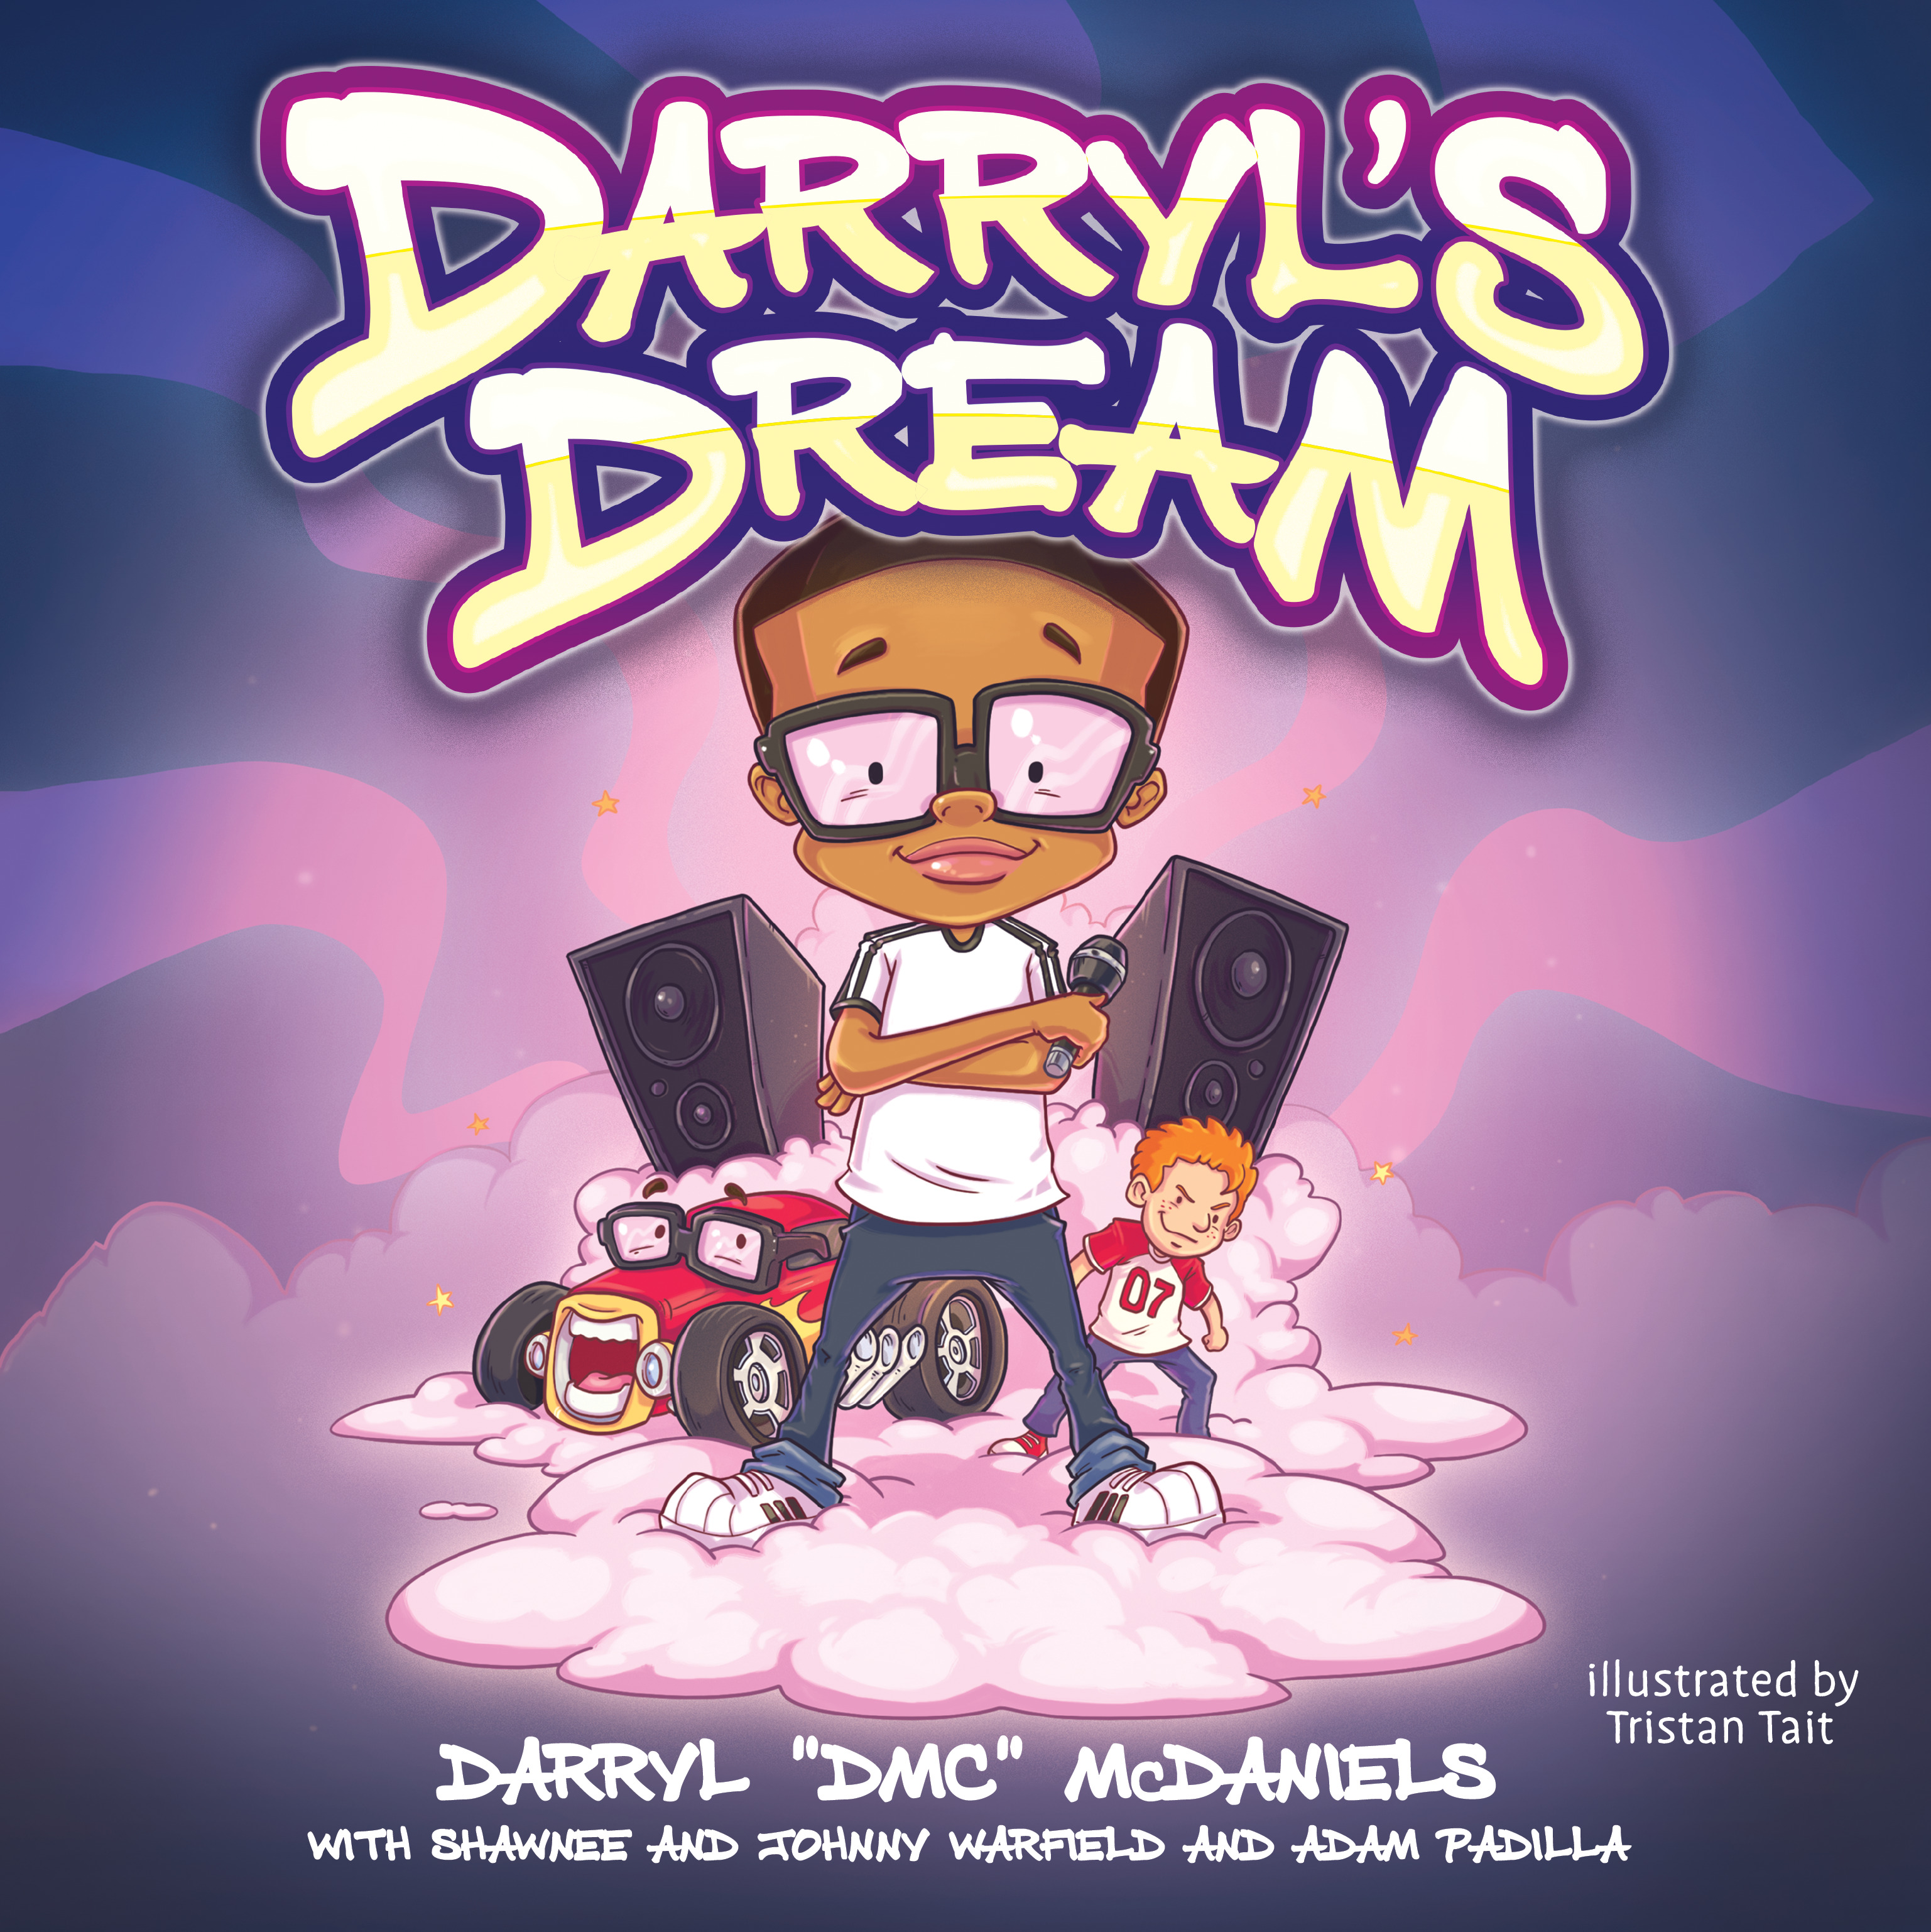 Darryl's Dream | McDaniels, Darryl "DMC"